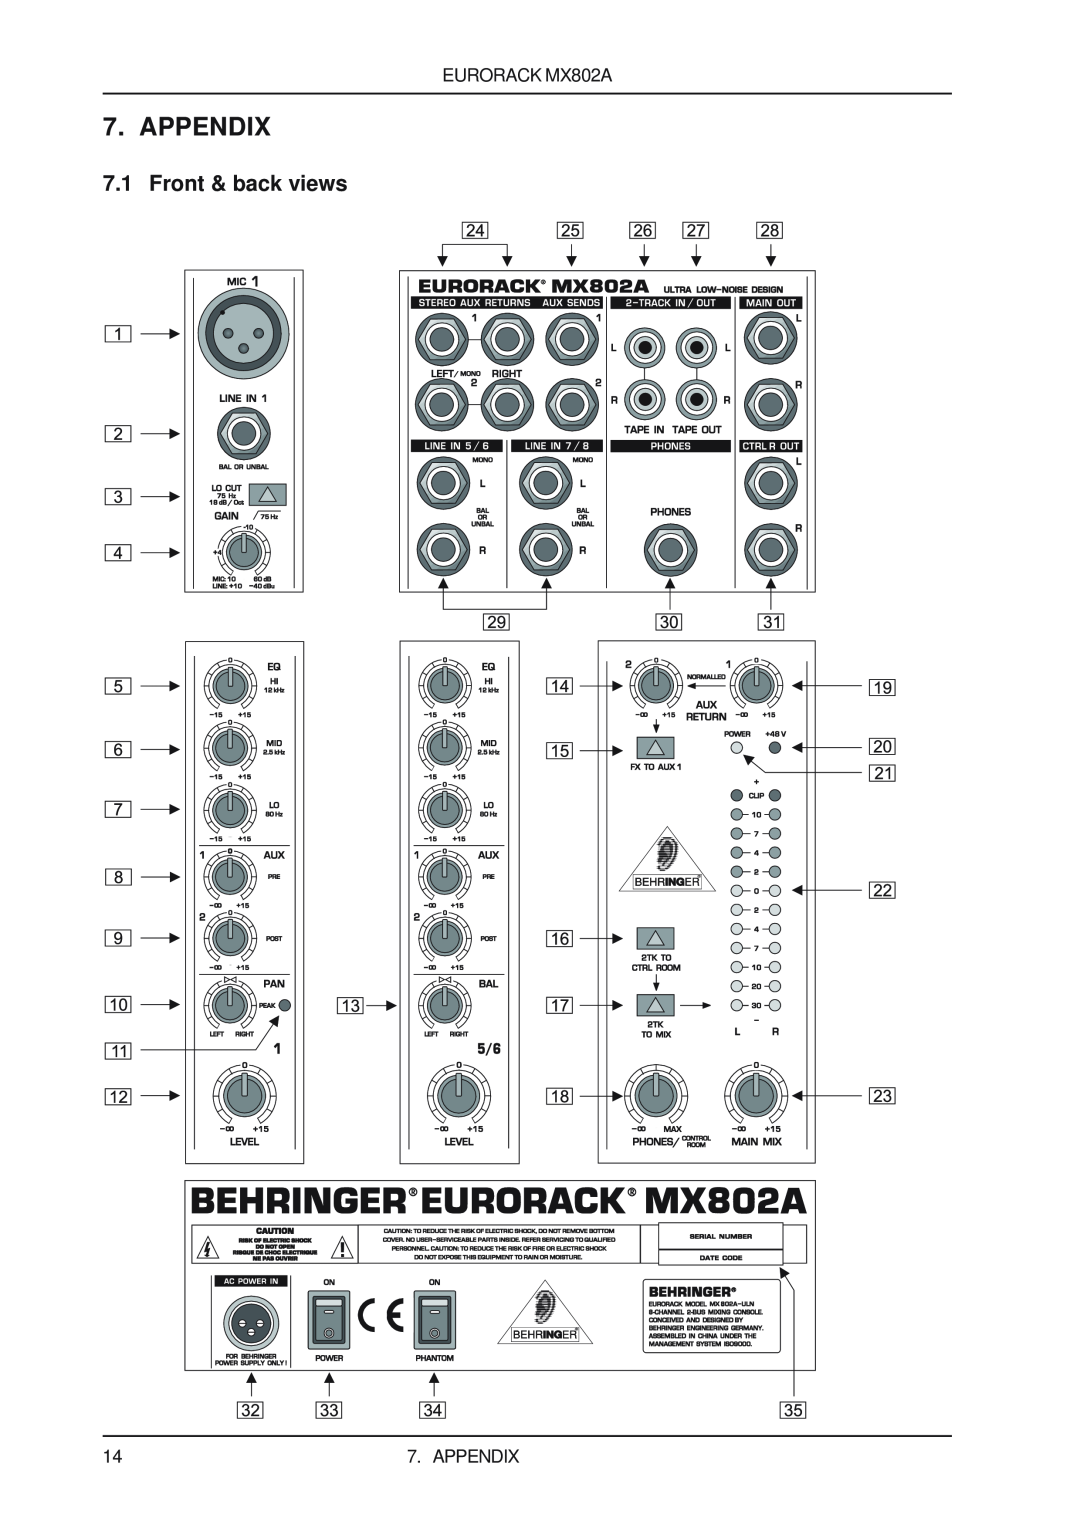 Behringer MX802A user manual Appendix, Front & back views 